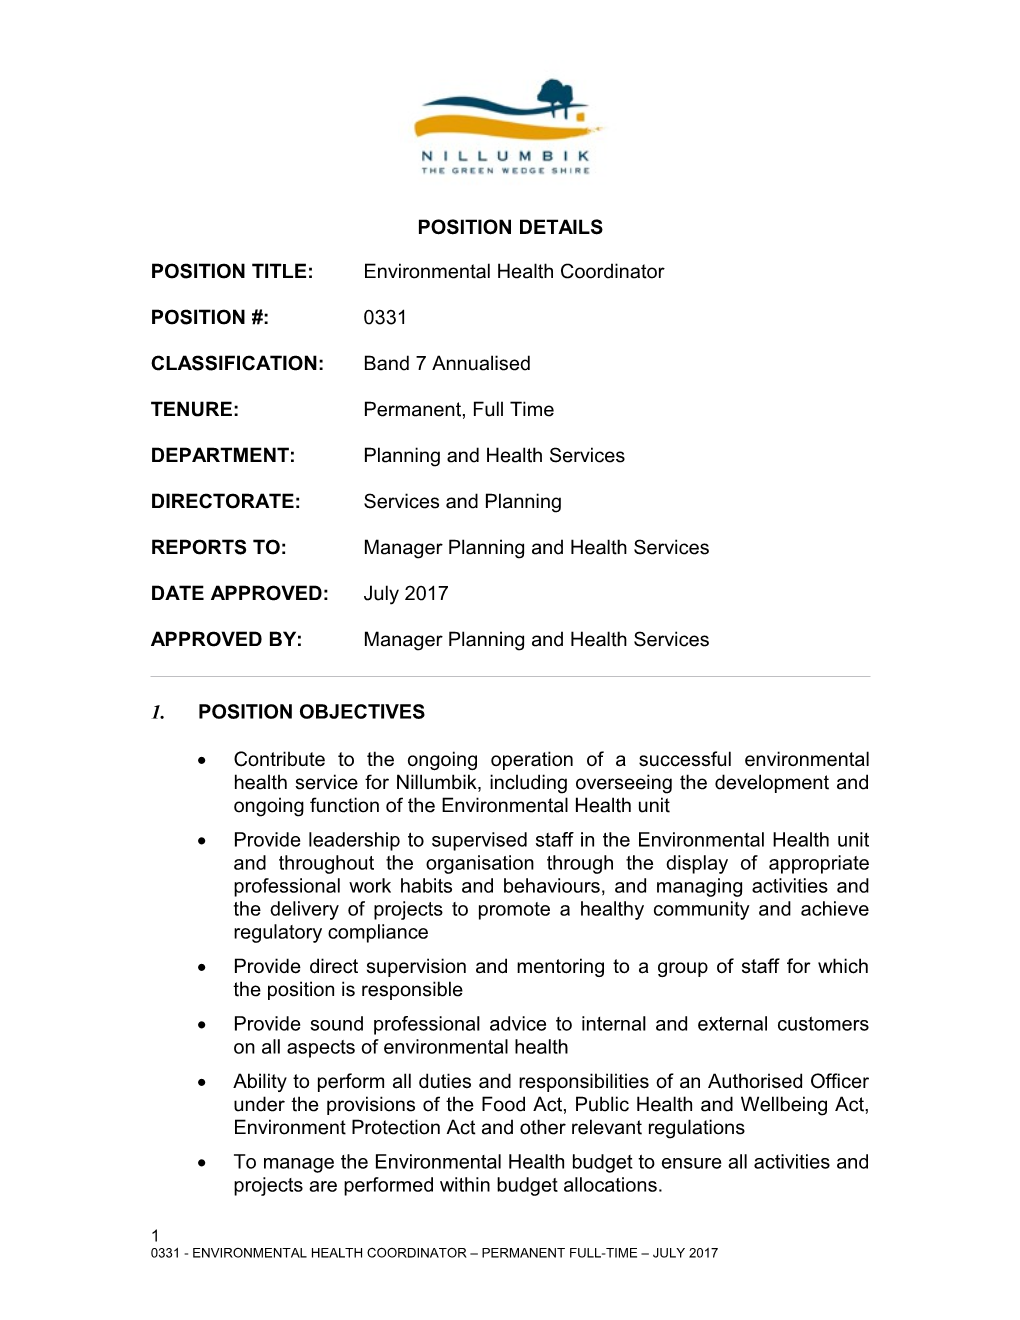 Environmental Health Coordinator Position Description